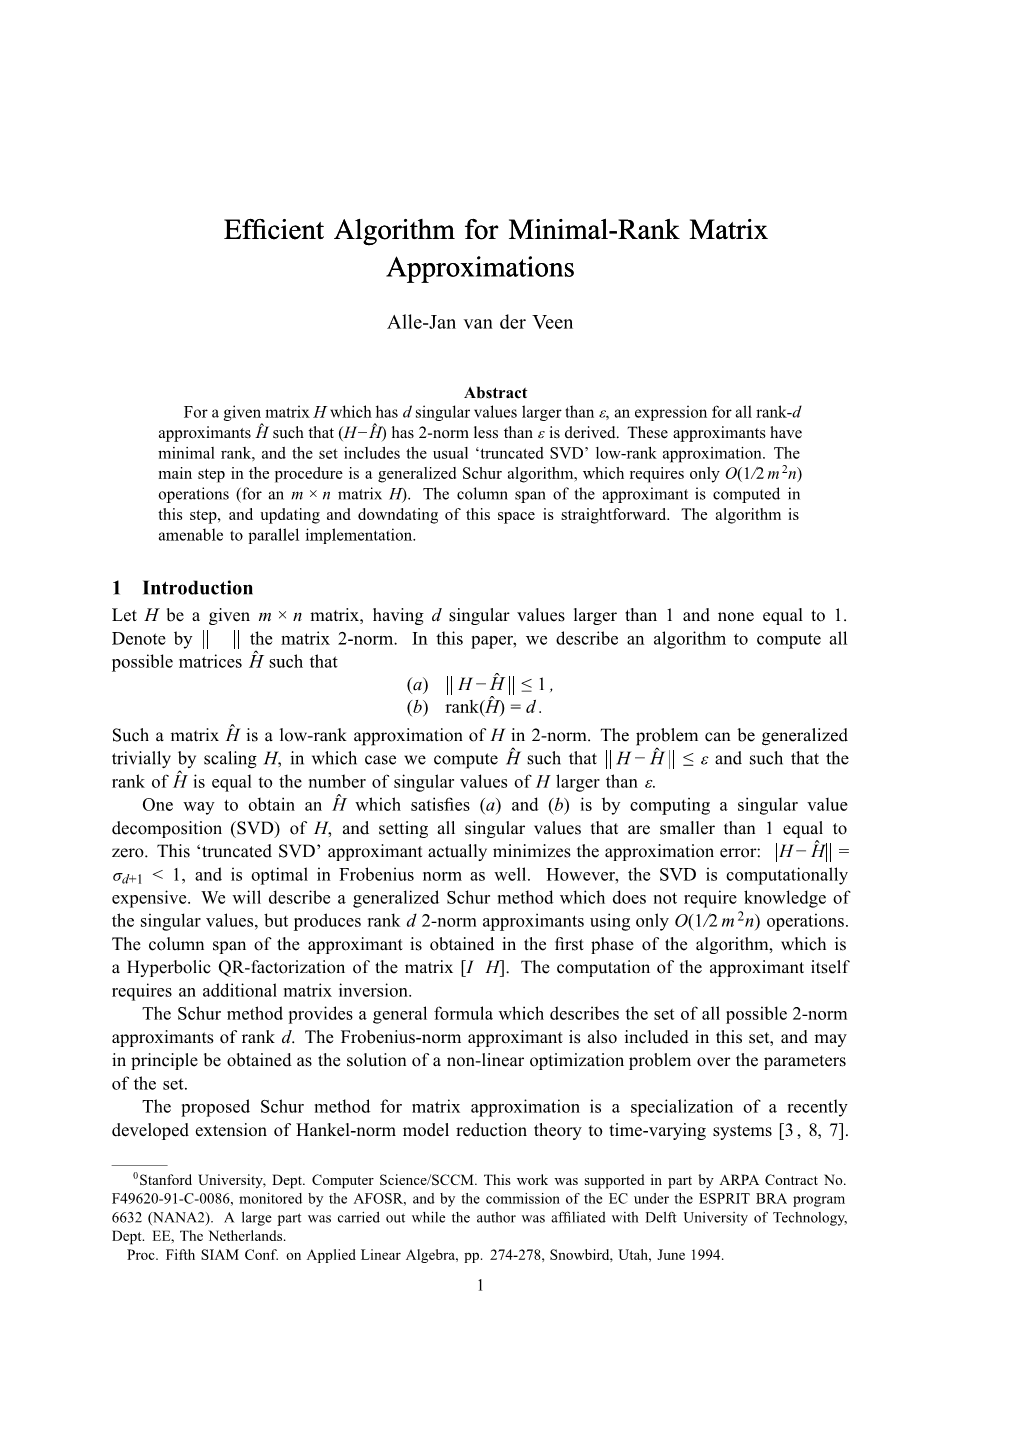 Efficient Algorithm for Minimal-Rank Matrix Approximations